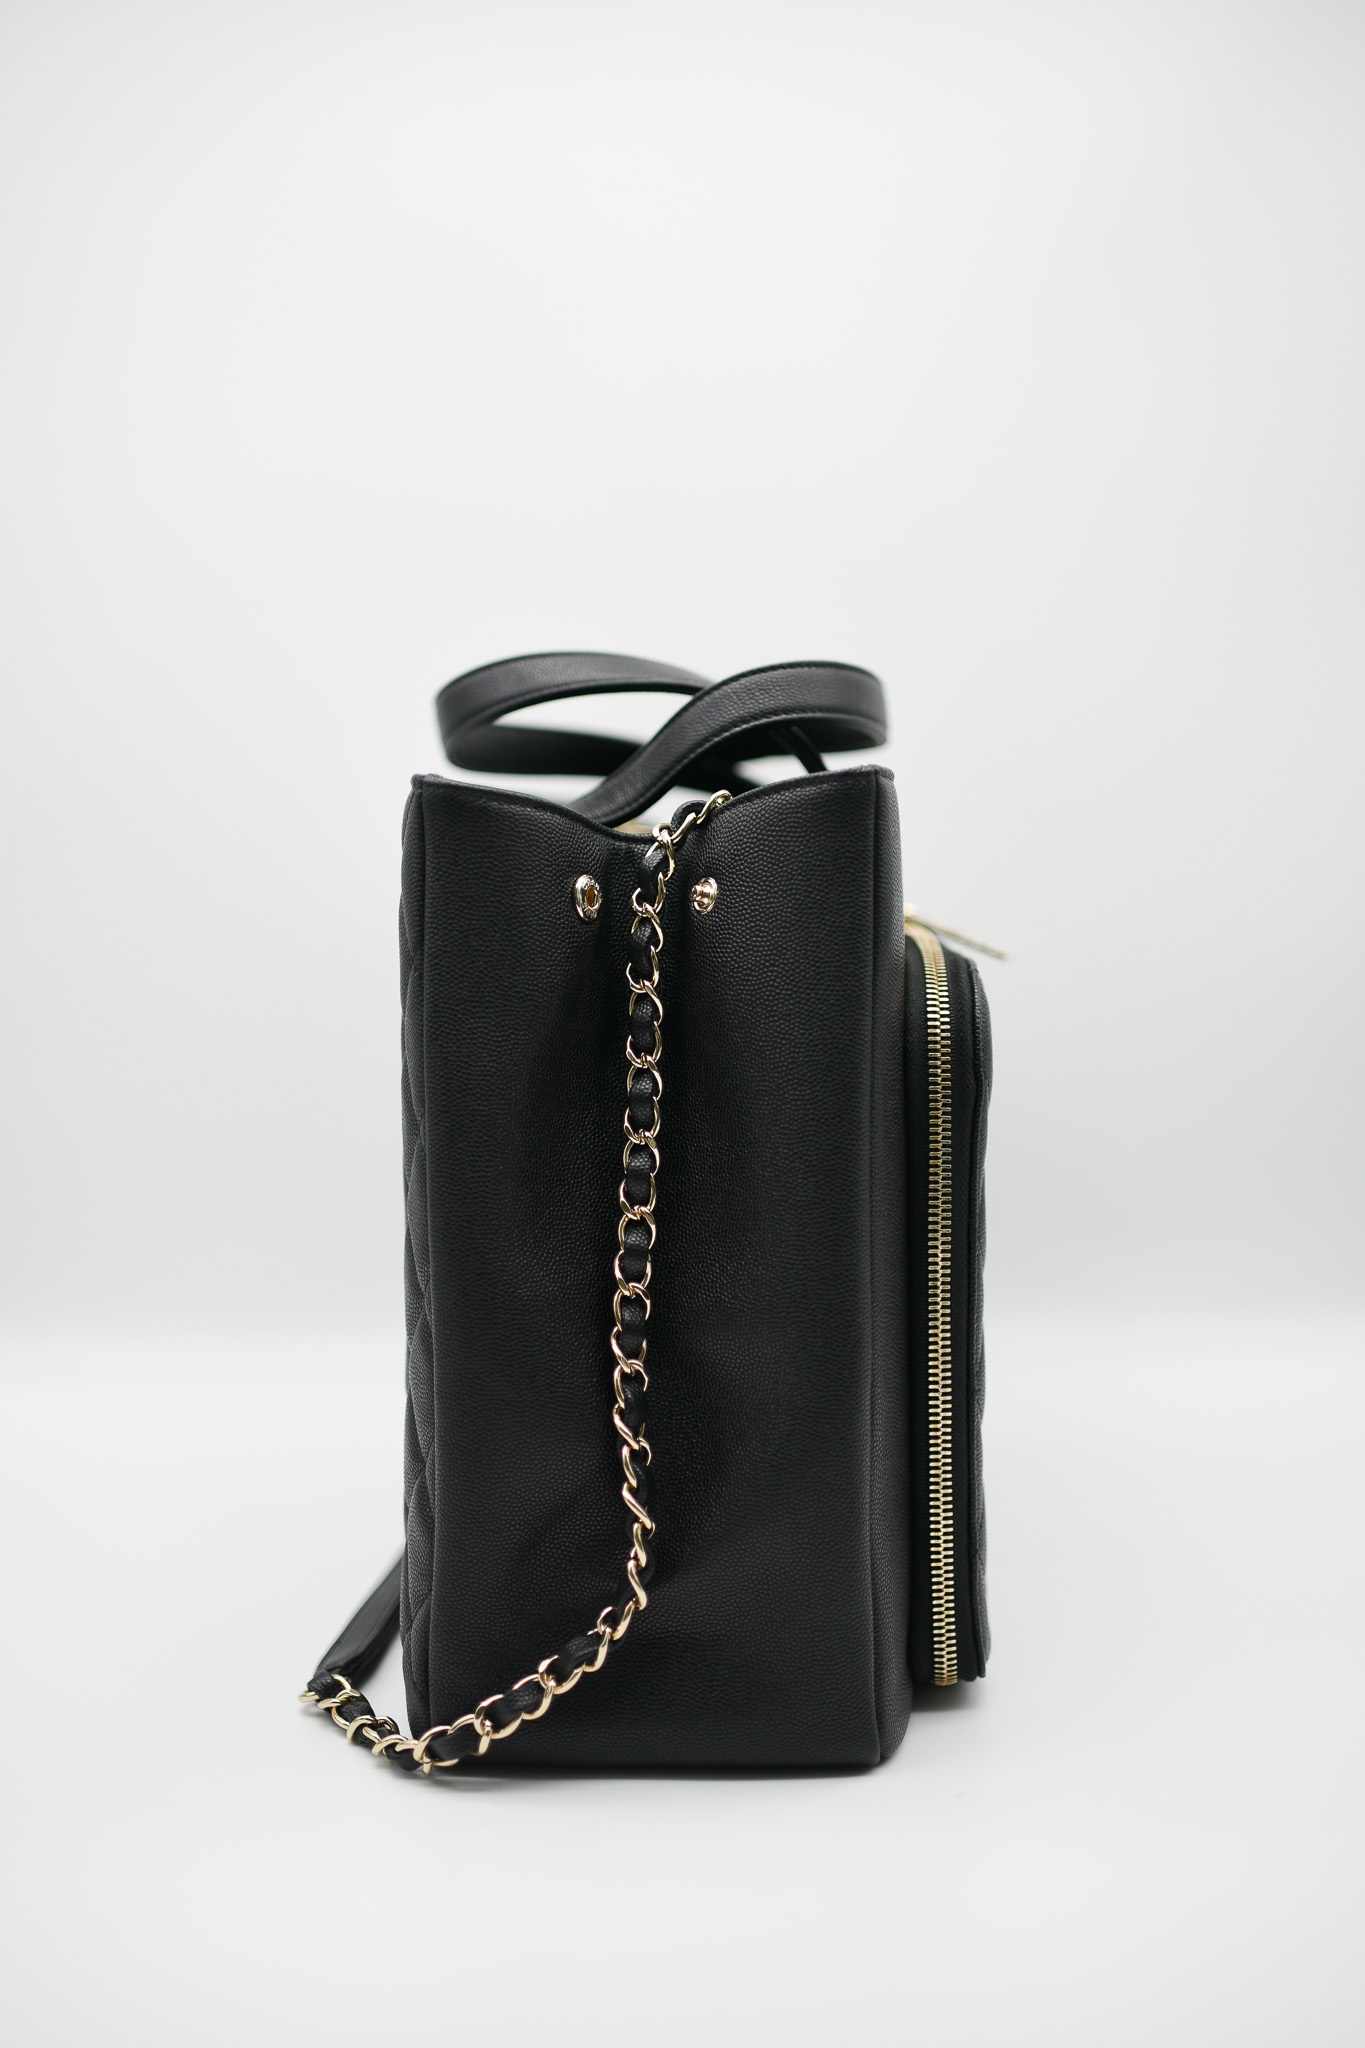 Chanel Grand Shopping Tote Bag, Black Caviar Leather, Silver Hardware,  Preowned in Box - Julia Rose Boston